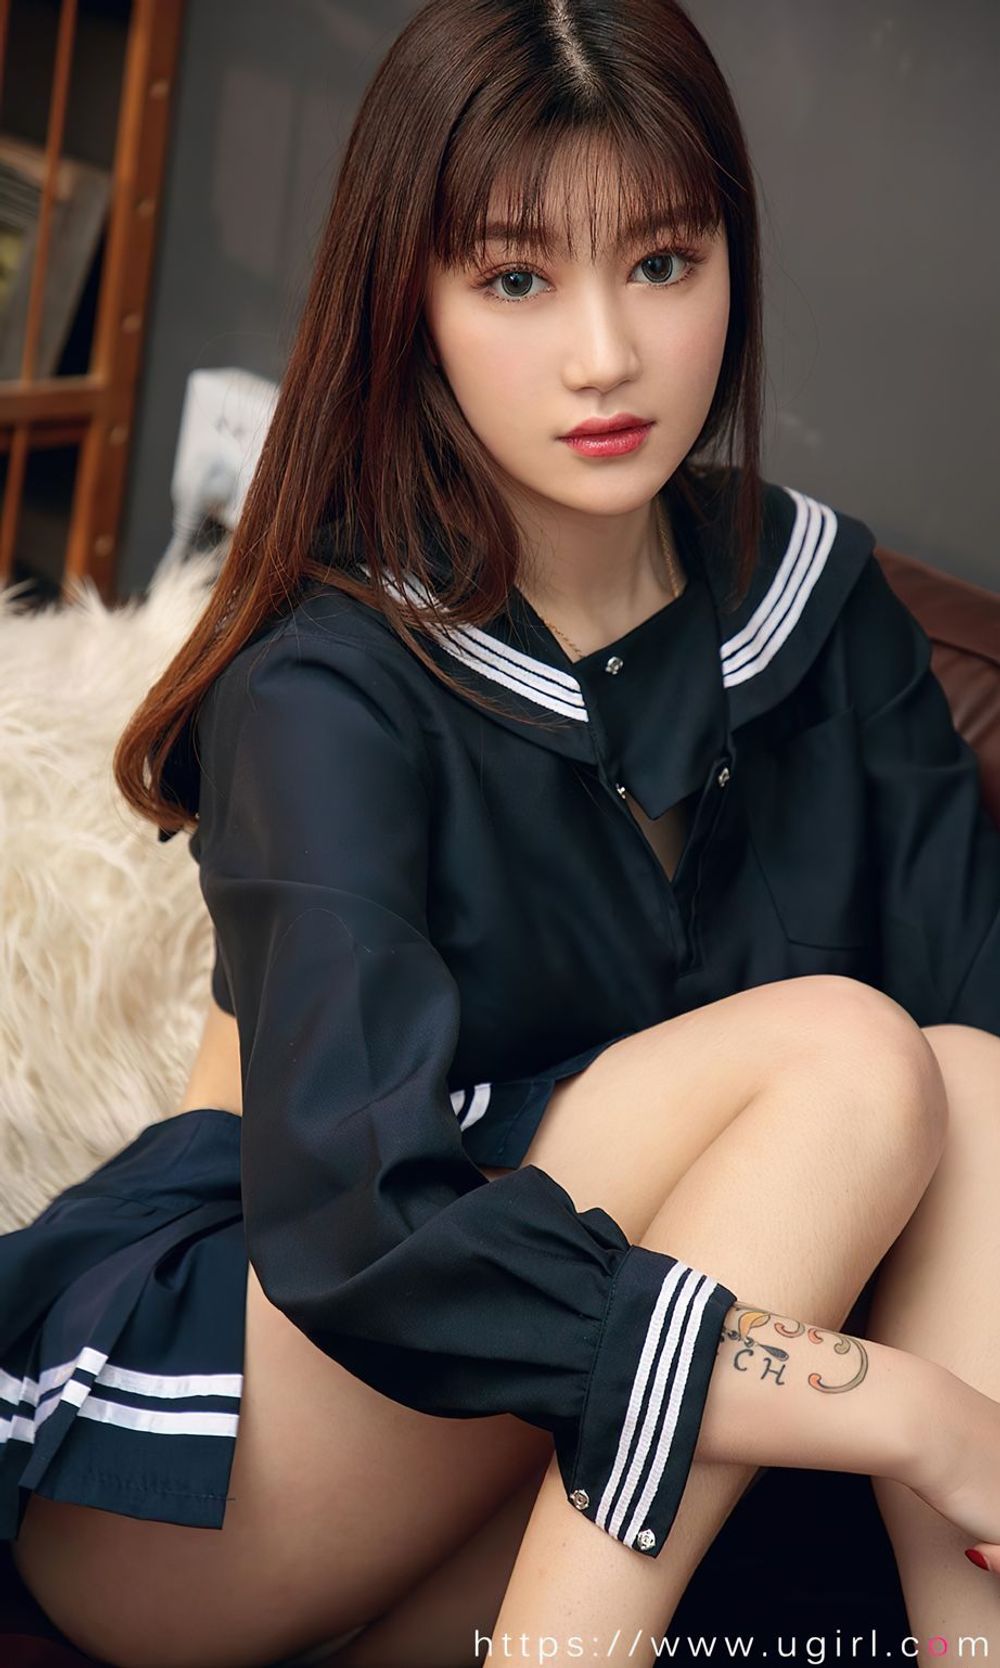 Xu Xuanxuan girl taboo uniform girl is very seductive